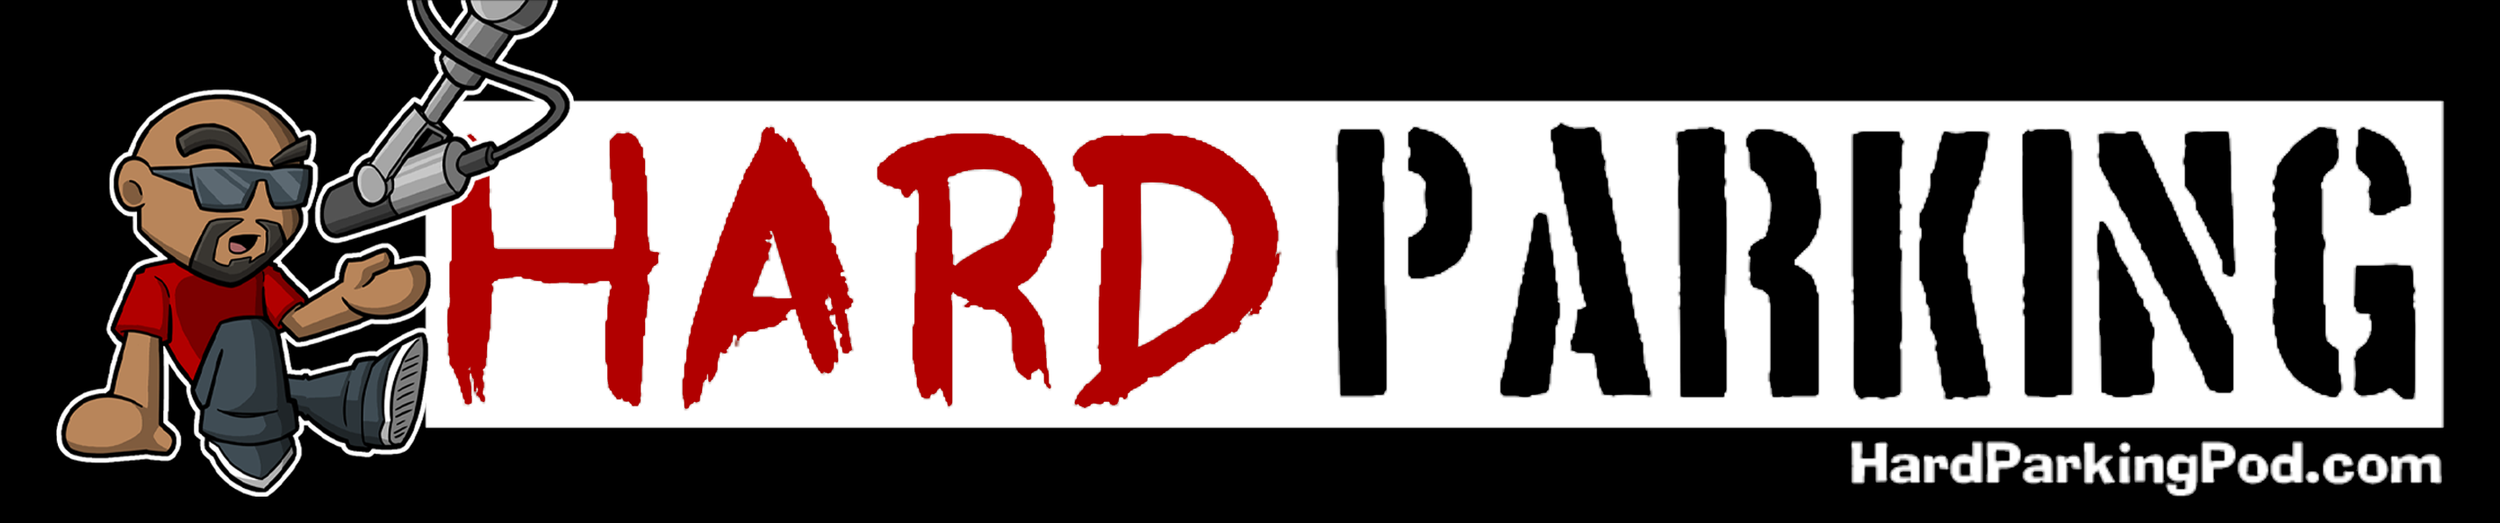 HardParkingPod logo